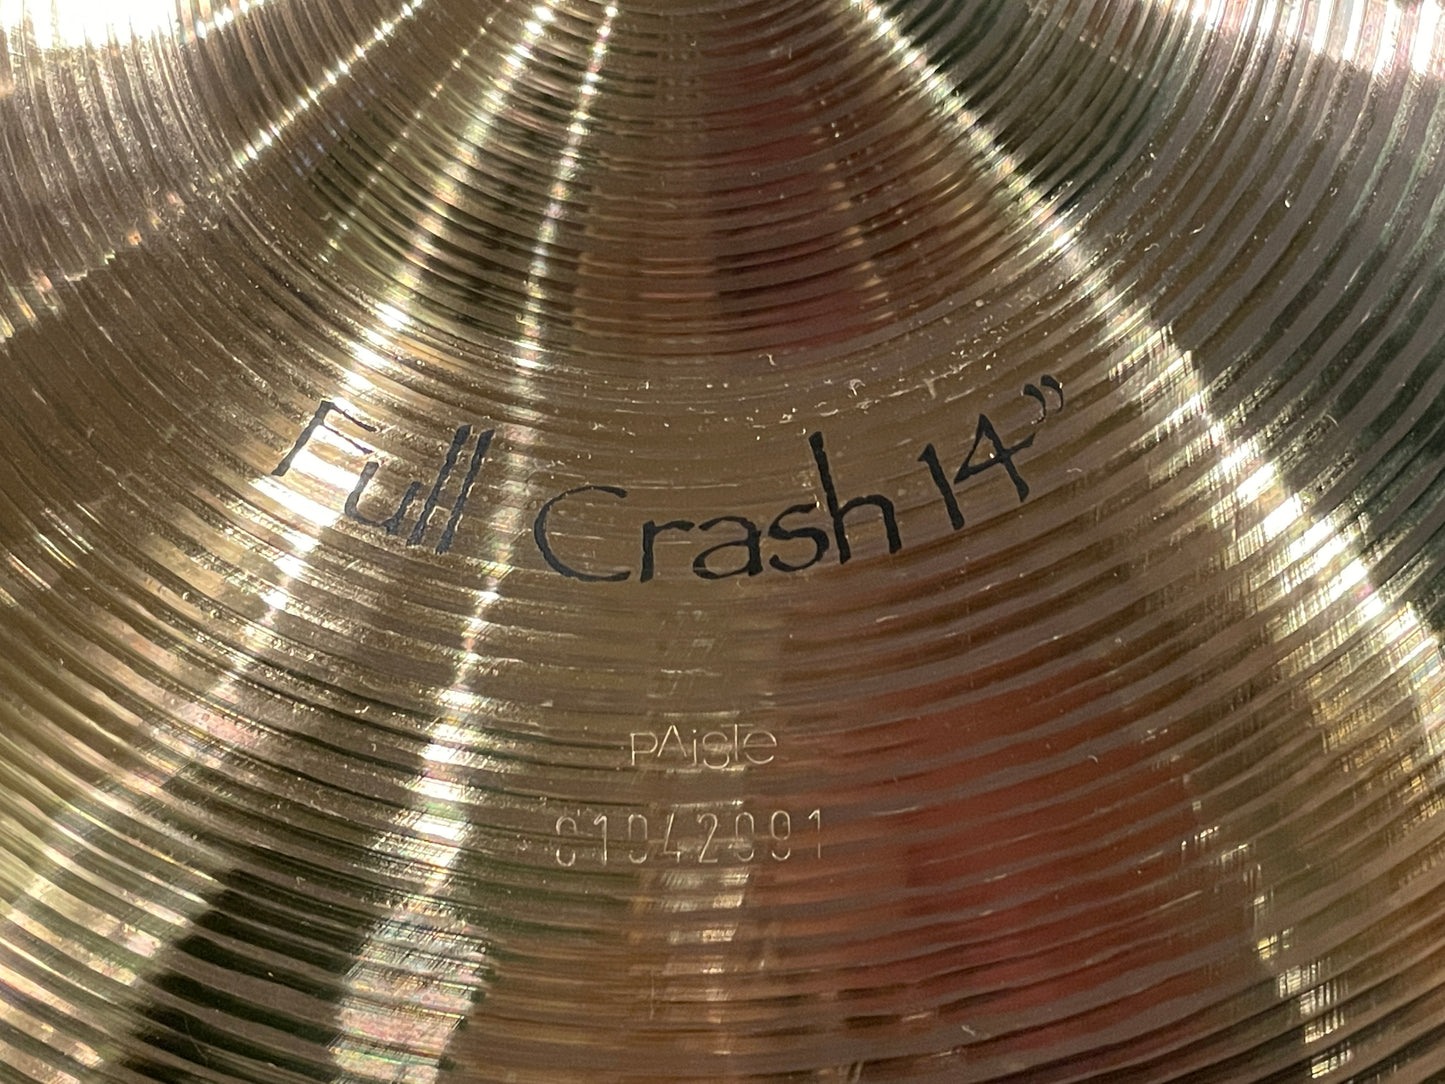 14" Paiste Signature Full Crash Cymbal 690g